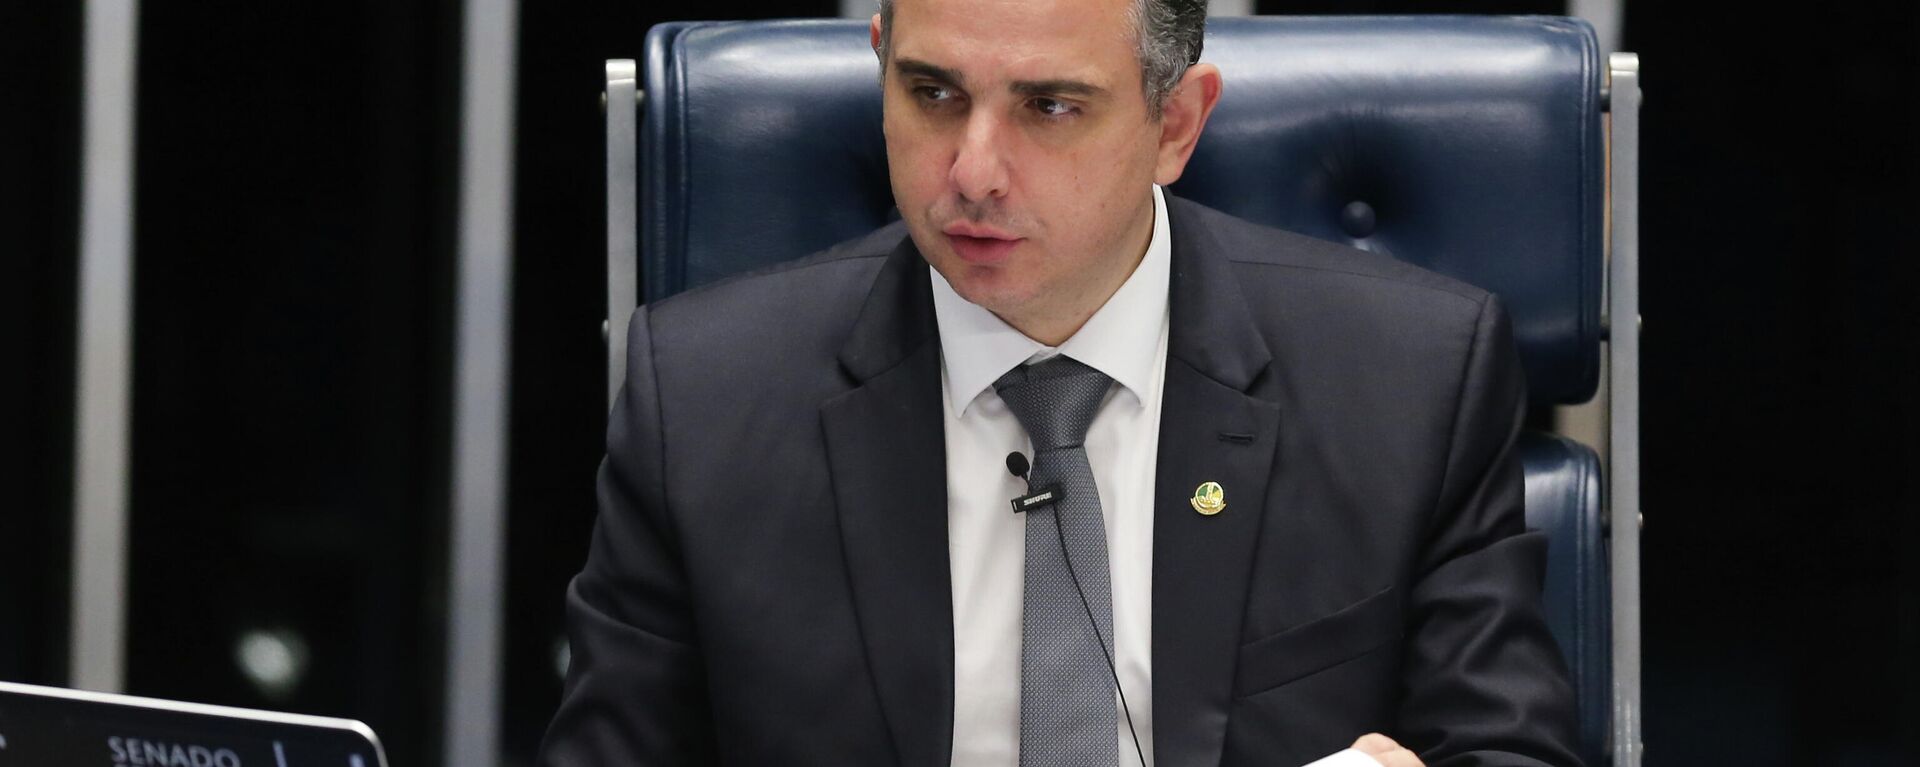 Rodrigo Pacheco (PSD-MG), presidente do Senado Federal - Sputnik Brasil, 1920, 15.11.2021